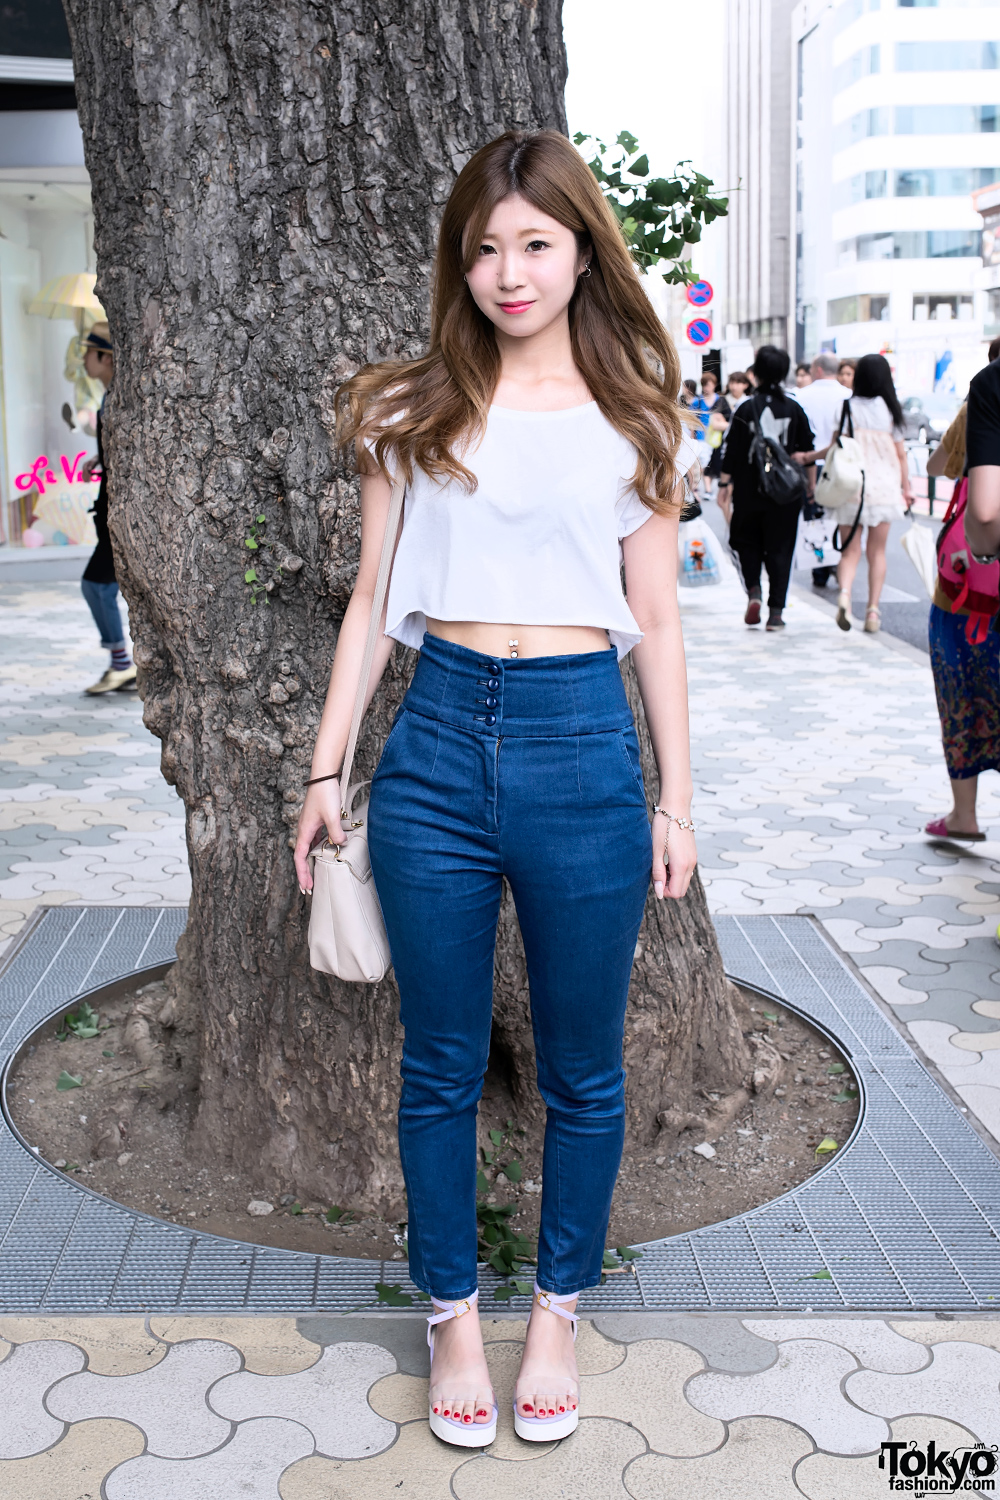 Crop Top, Navel Piercing, High Waist Jeans & Samantha Vega in Harajuku